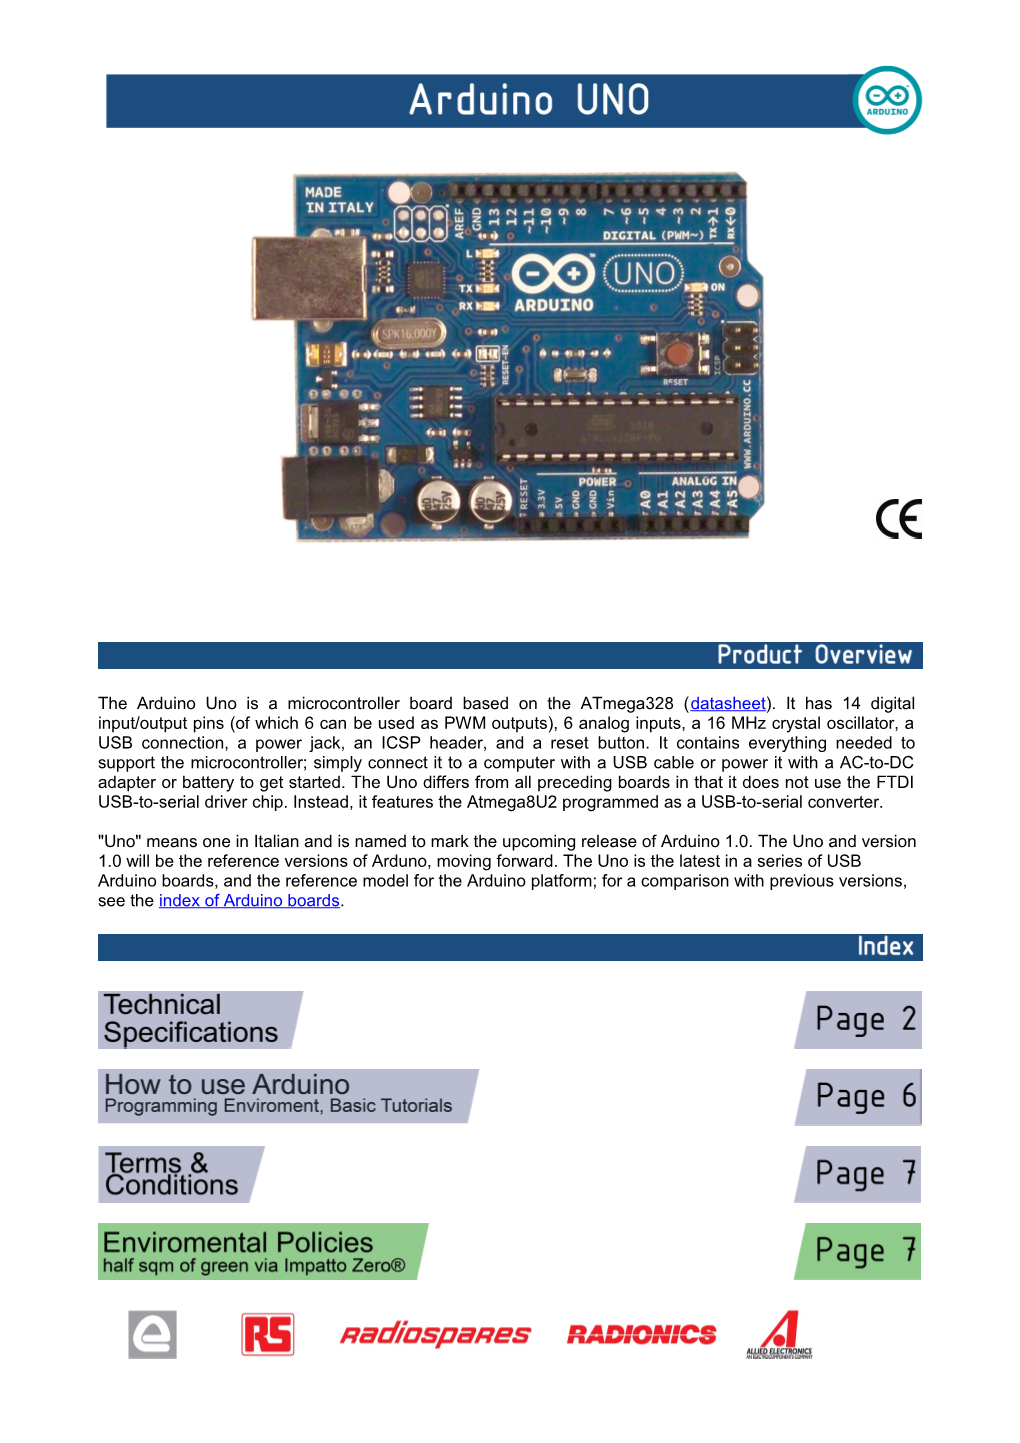 Arduino Uno Is a Microcontroller Board Based on the Atmega328 (Datasheet)